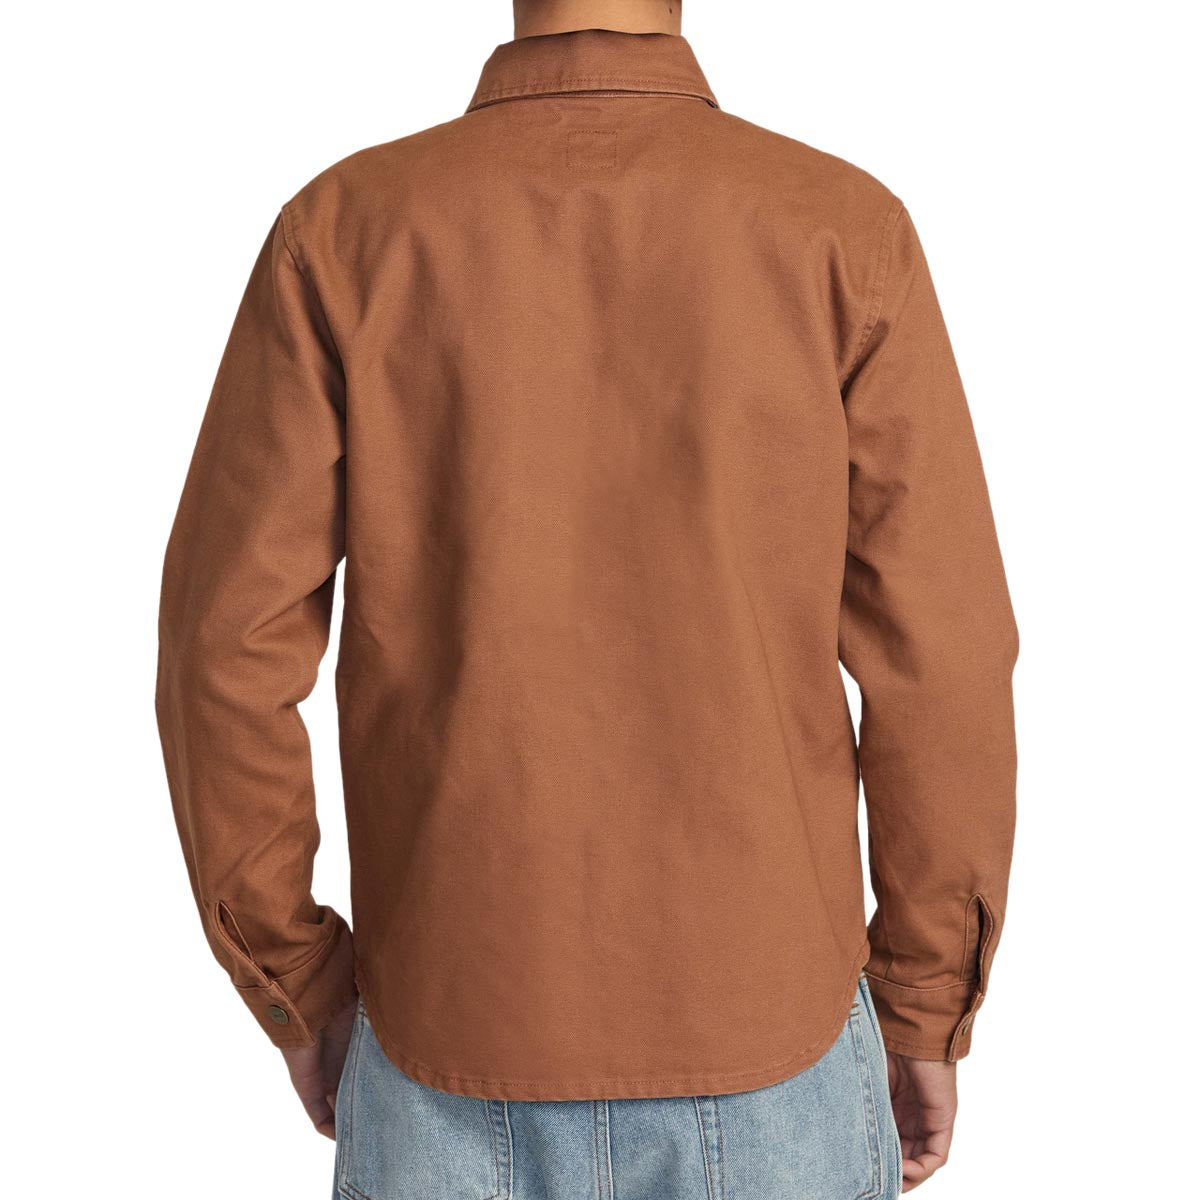 RVCA Chainmail Overshirt Long Sleeve Shirt - Rawhide image 2